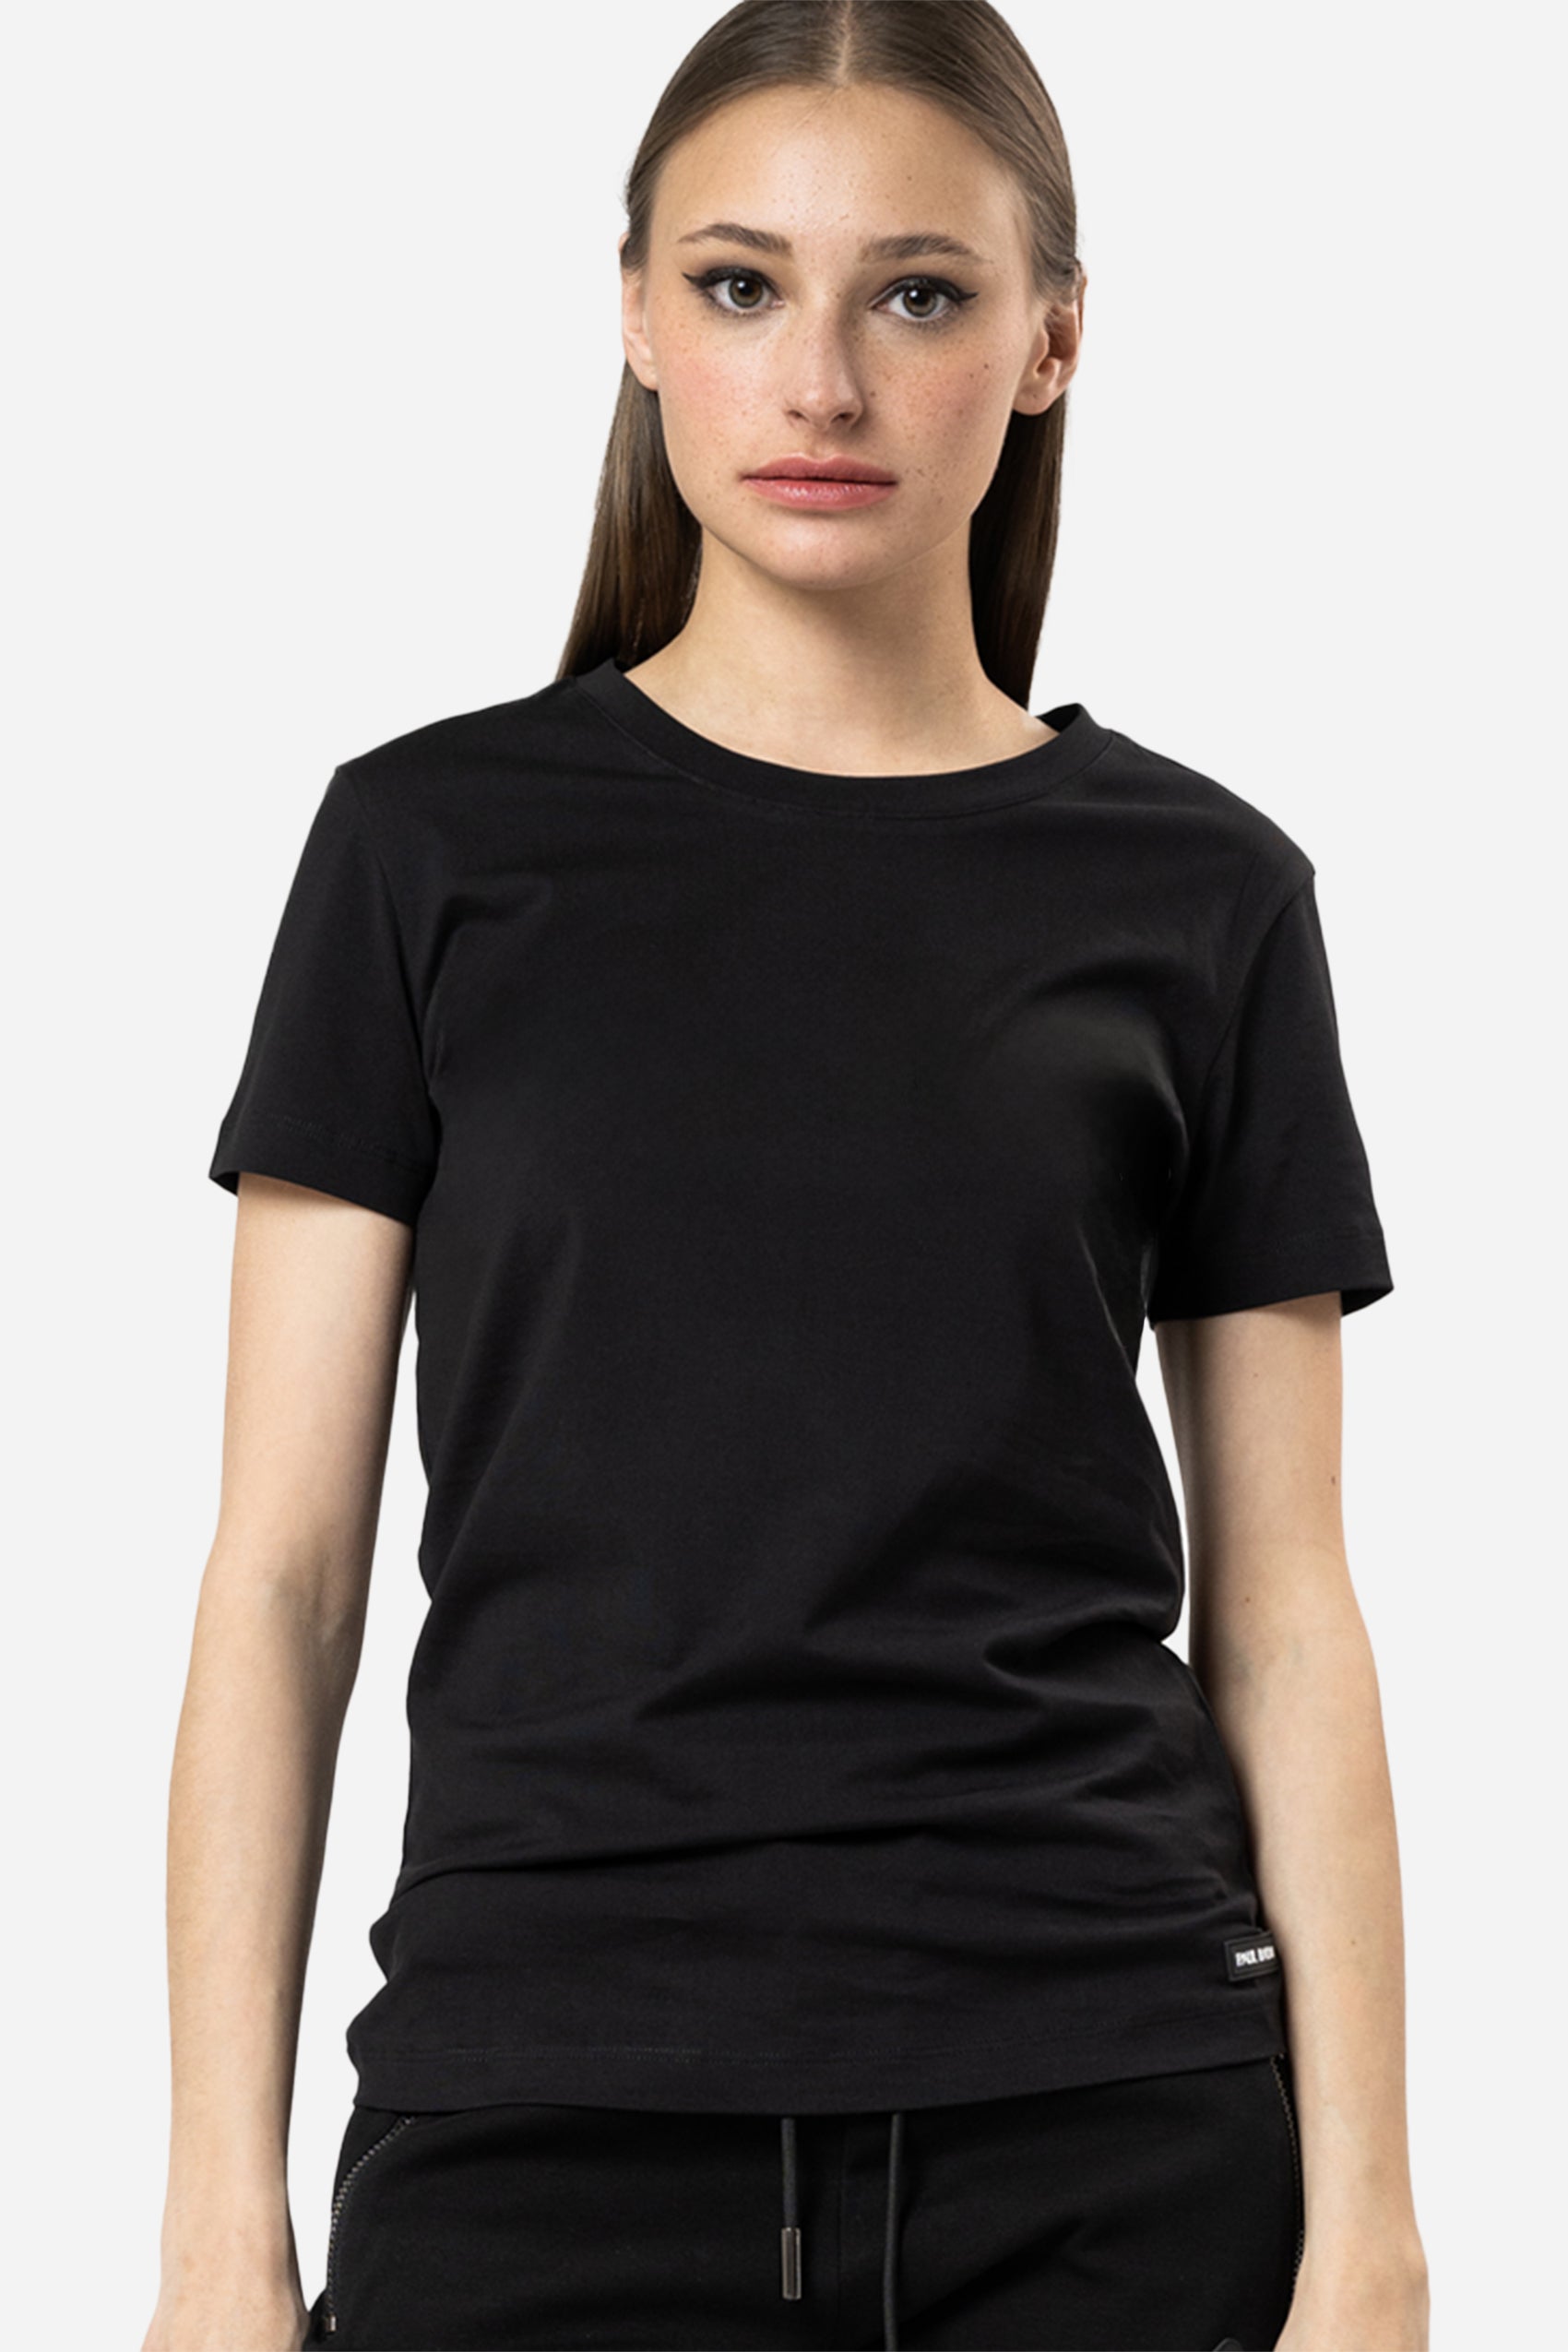 Basic T-Shirt black - PAUL BALM WORLD